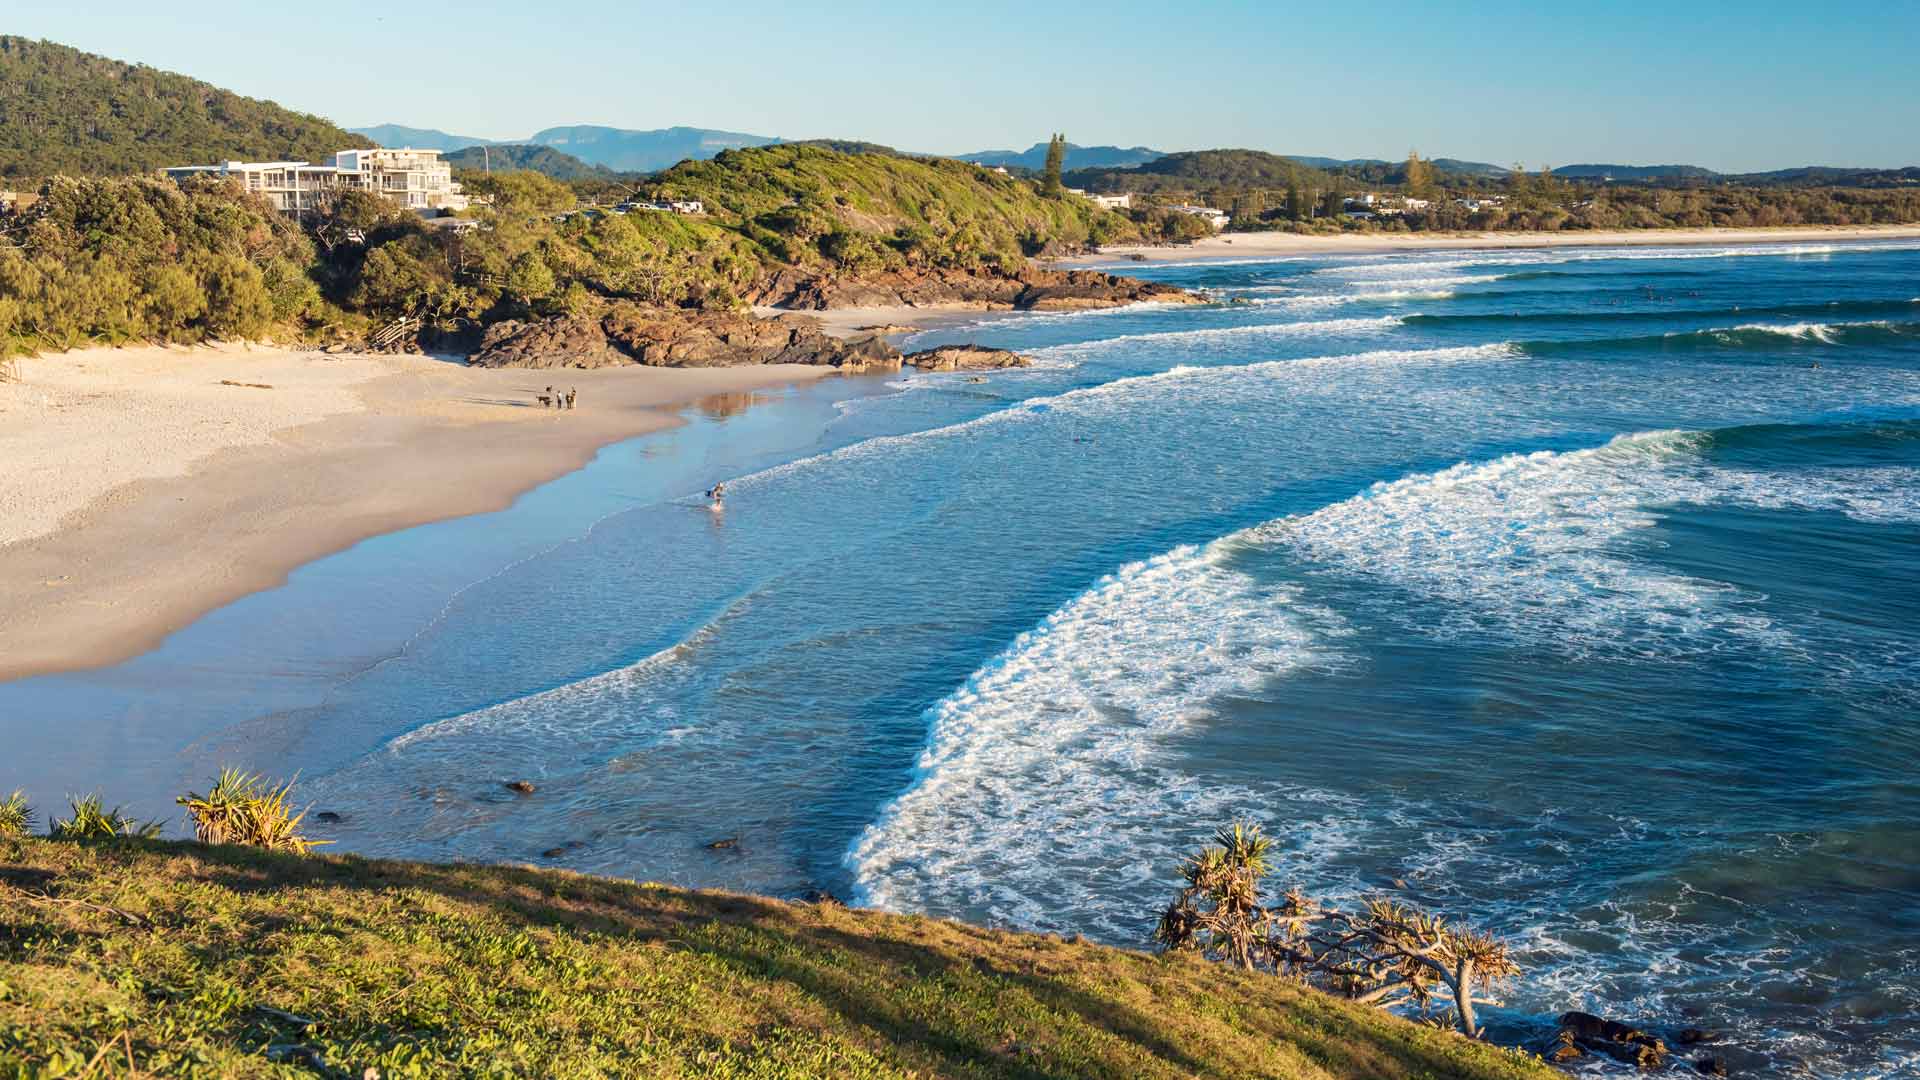 NSW's Cabarita Beach Has Been Named Australia's Best Beach for 2020